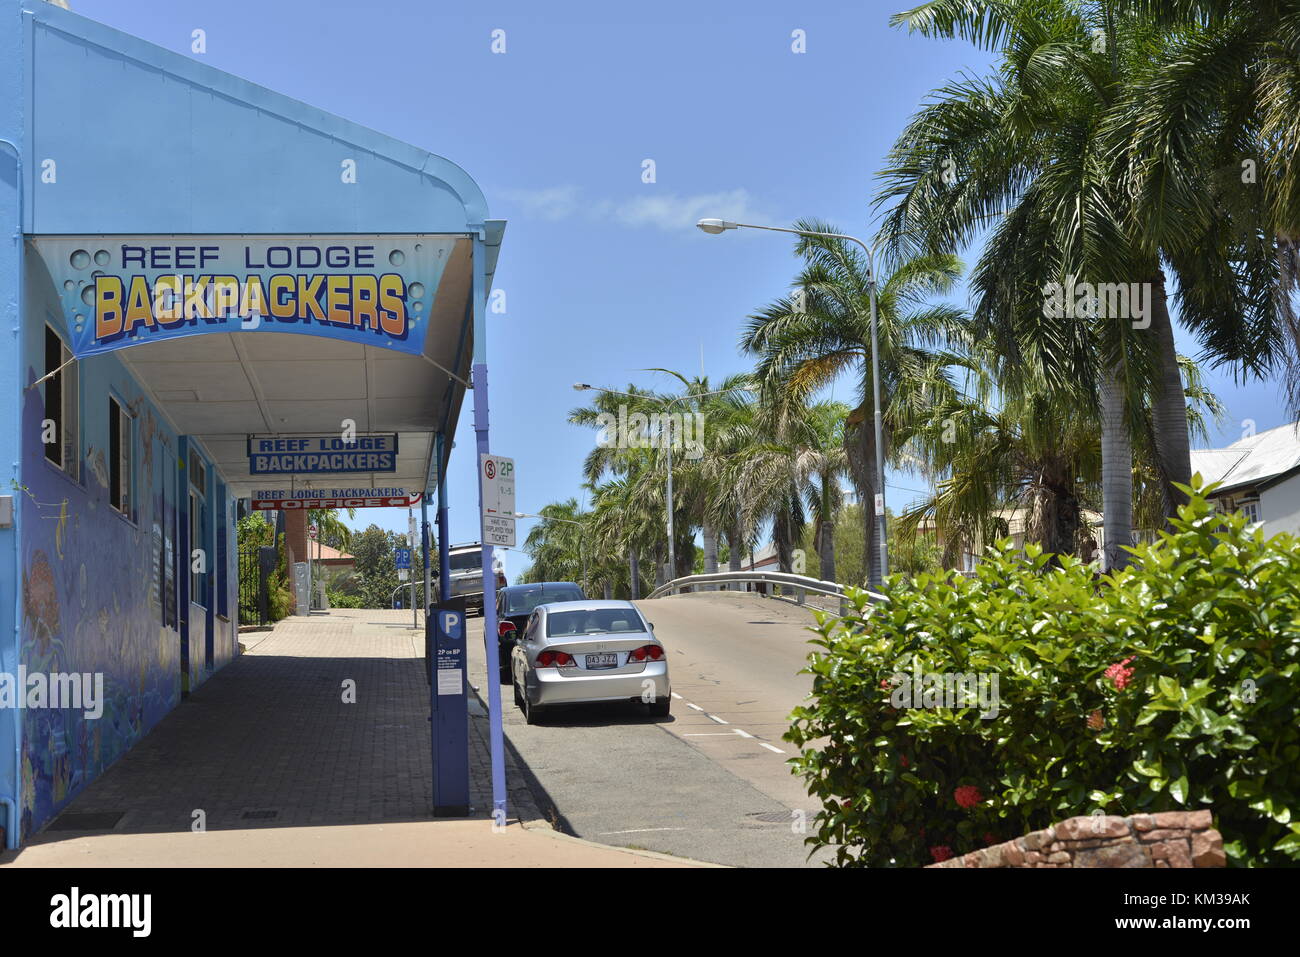 Reef lodge backpackers, Townsville, Queensland, Australia Foto Stock